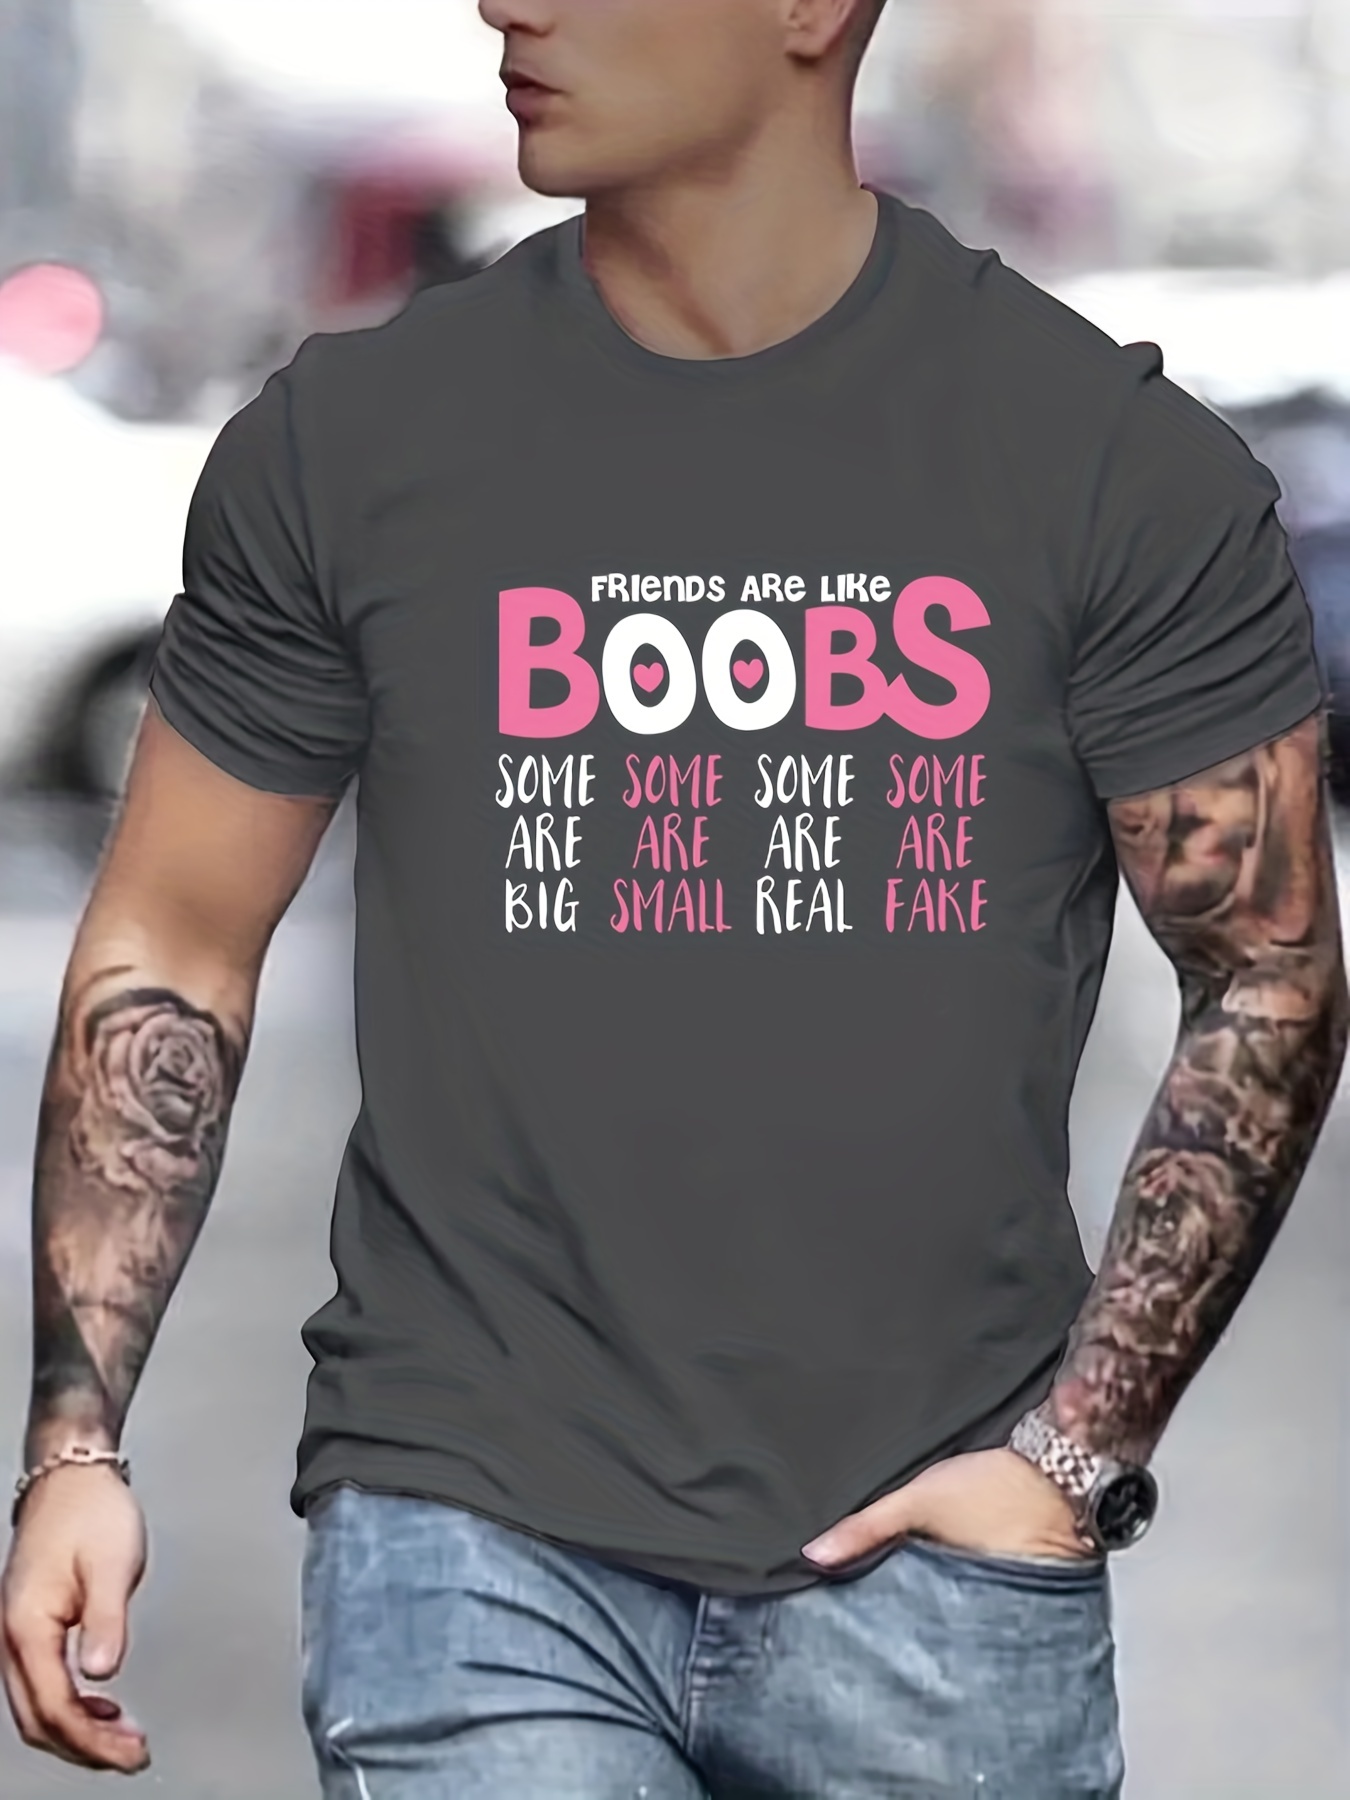 Breasts T-Shirts, Unique Designs